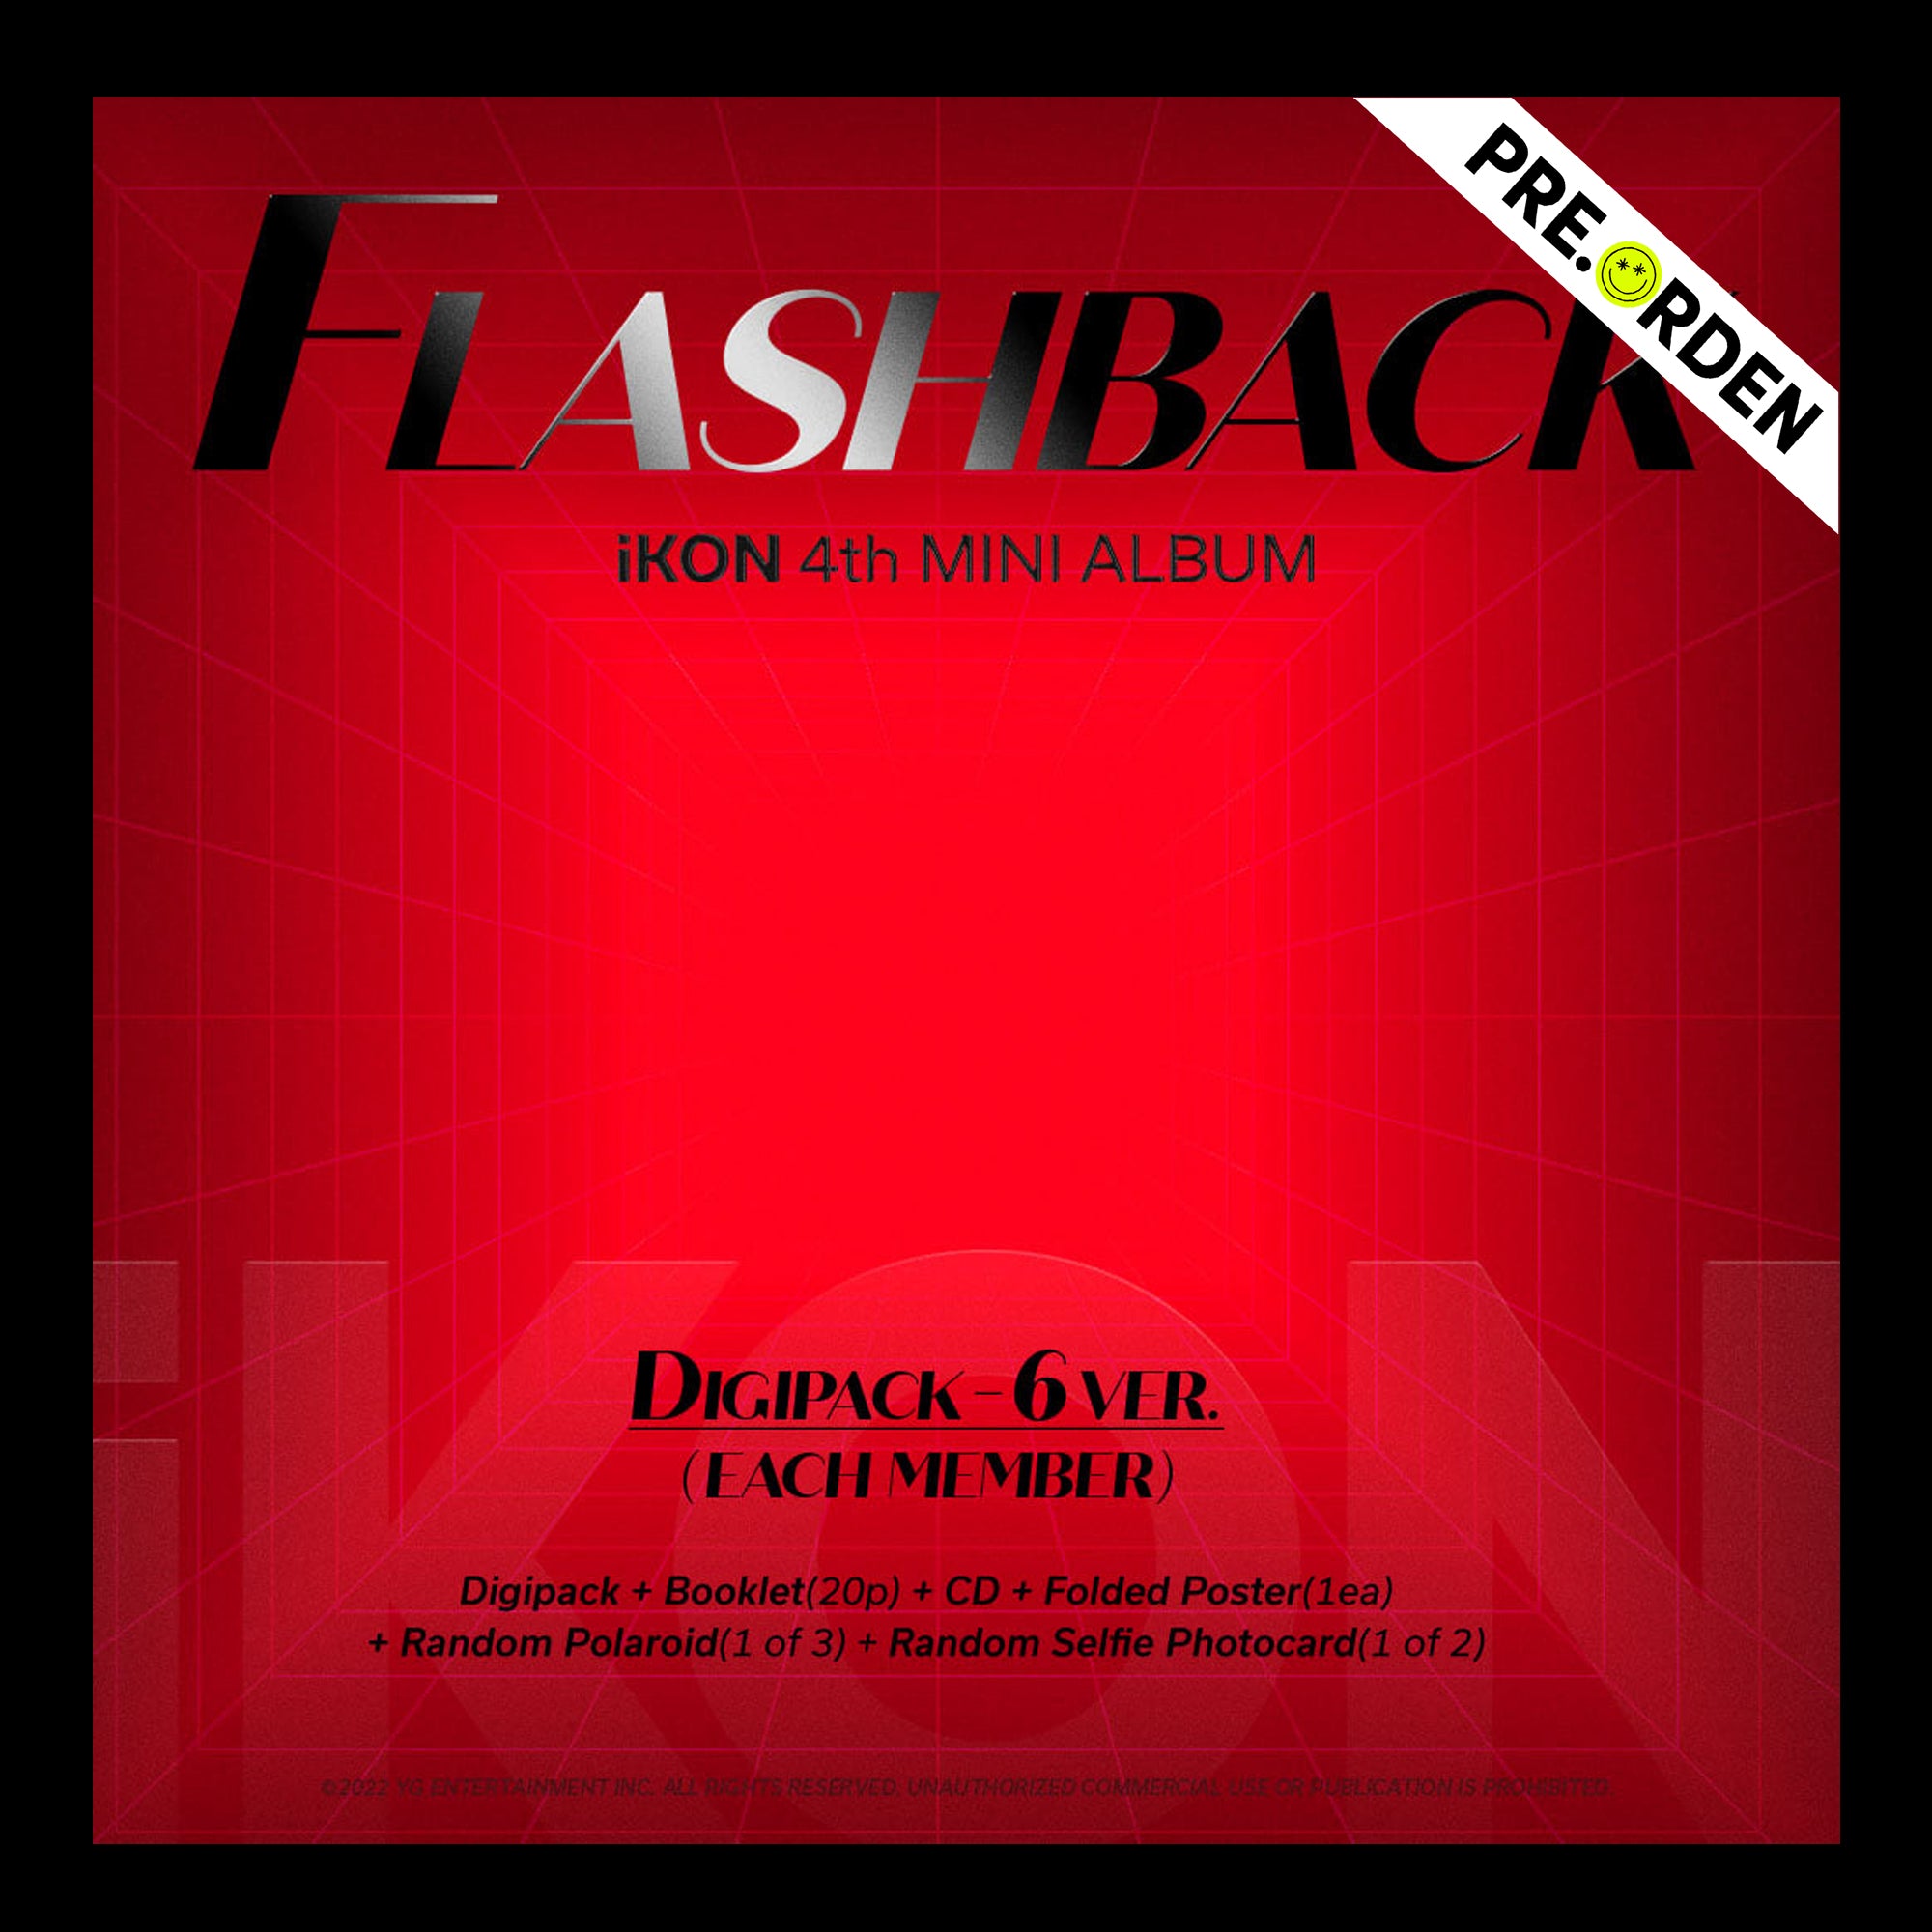 iKON - Flashback (Digipack Ver.)